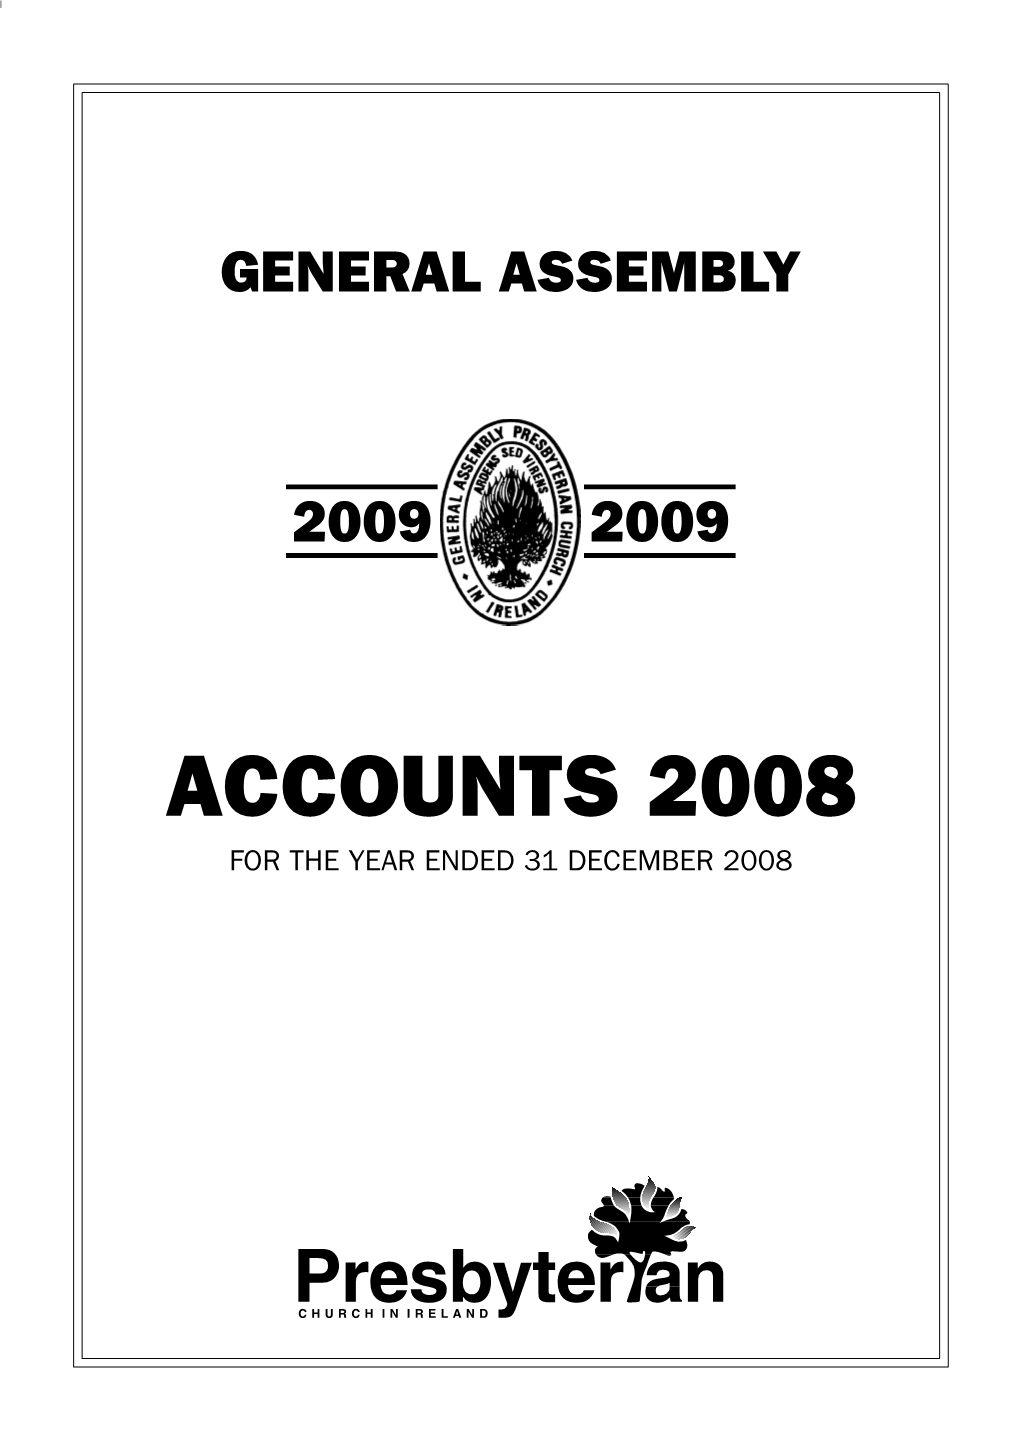 PCI Statement of Accounts 2008